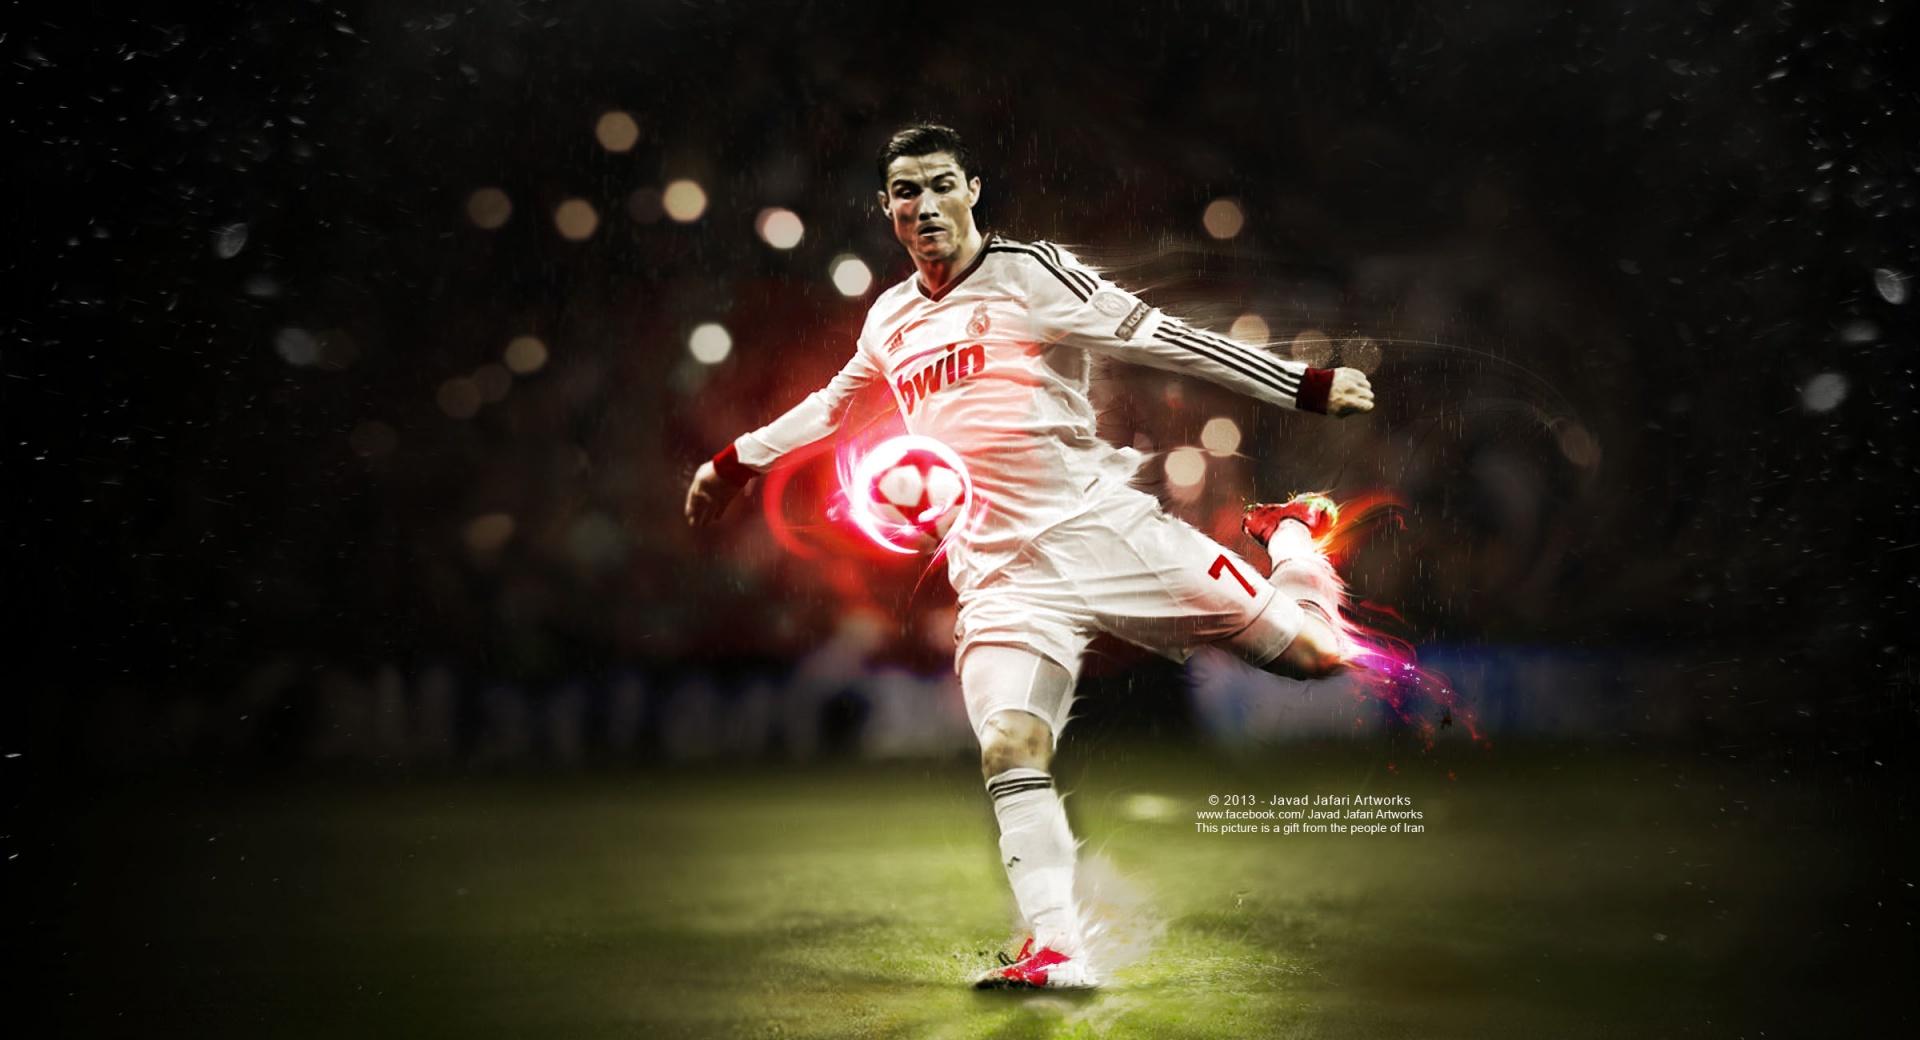 Ronaldo Kick at 1280 x 960 size wallpapers HD quality